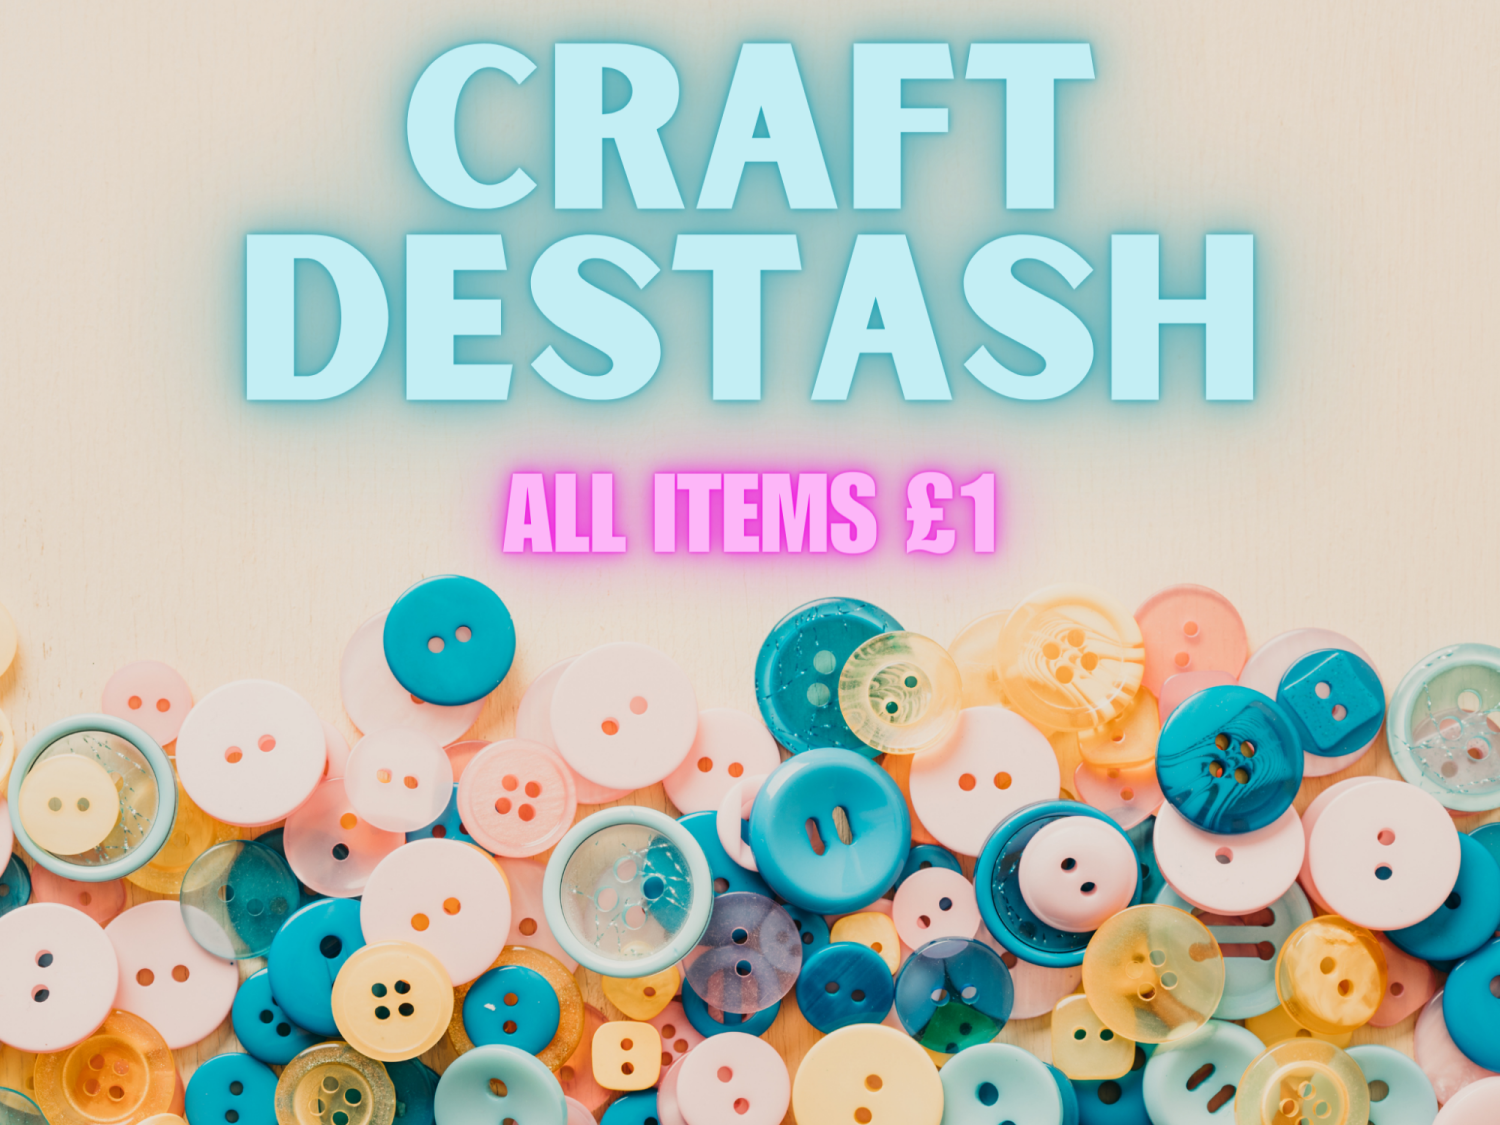 Craft Destash